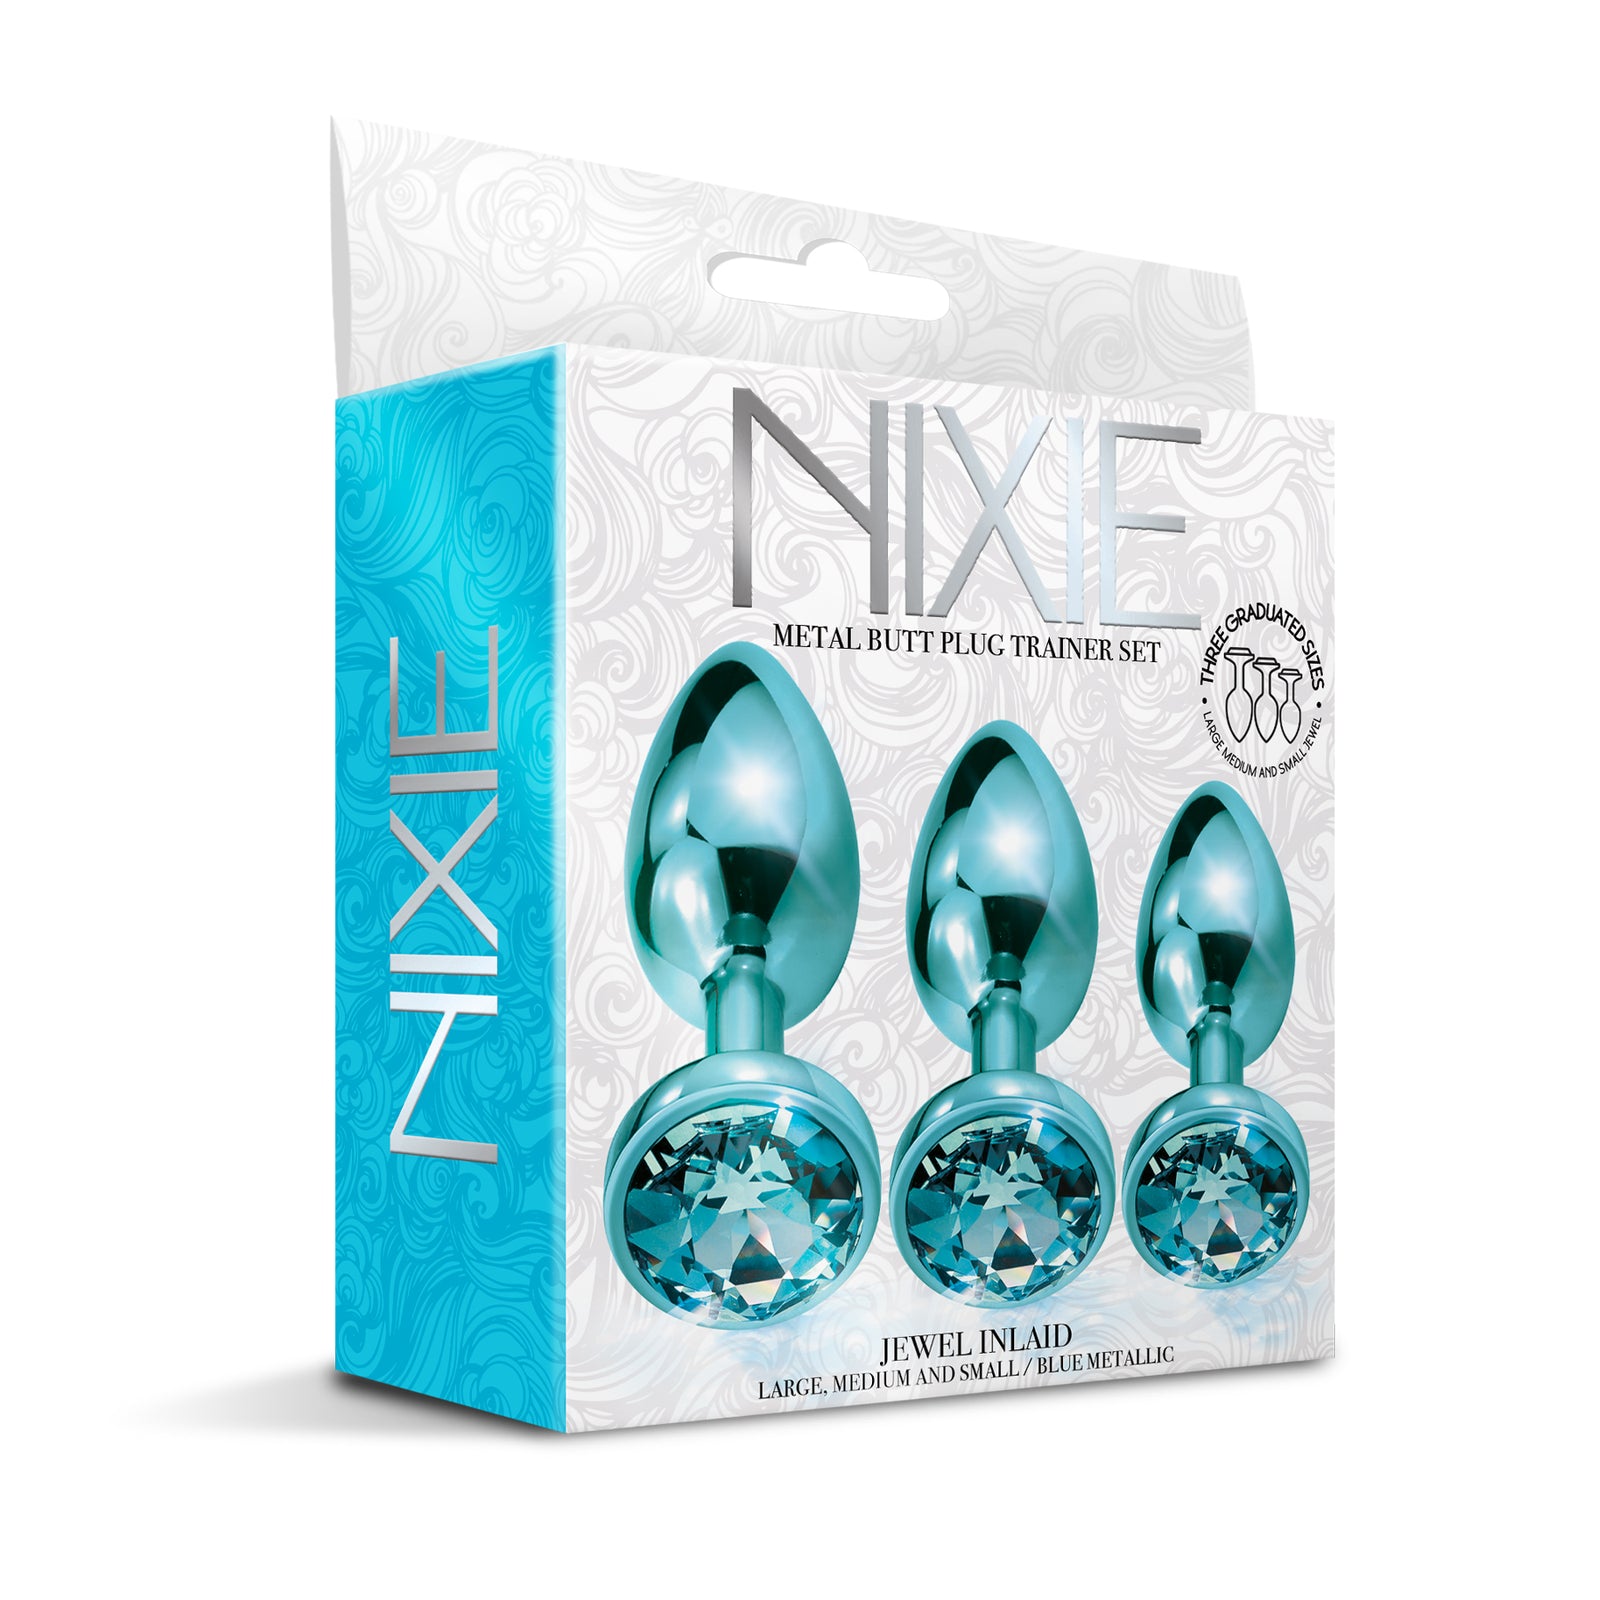 NIXIE Metal Butt Plug Trainer Set, Blue Metallic - THES